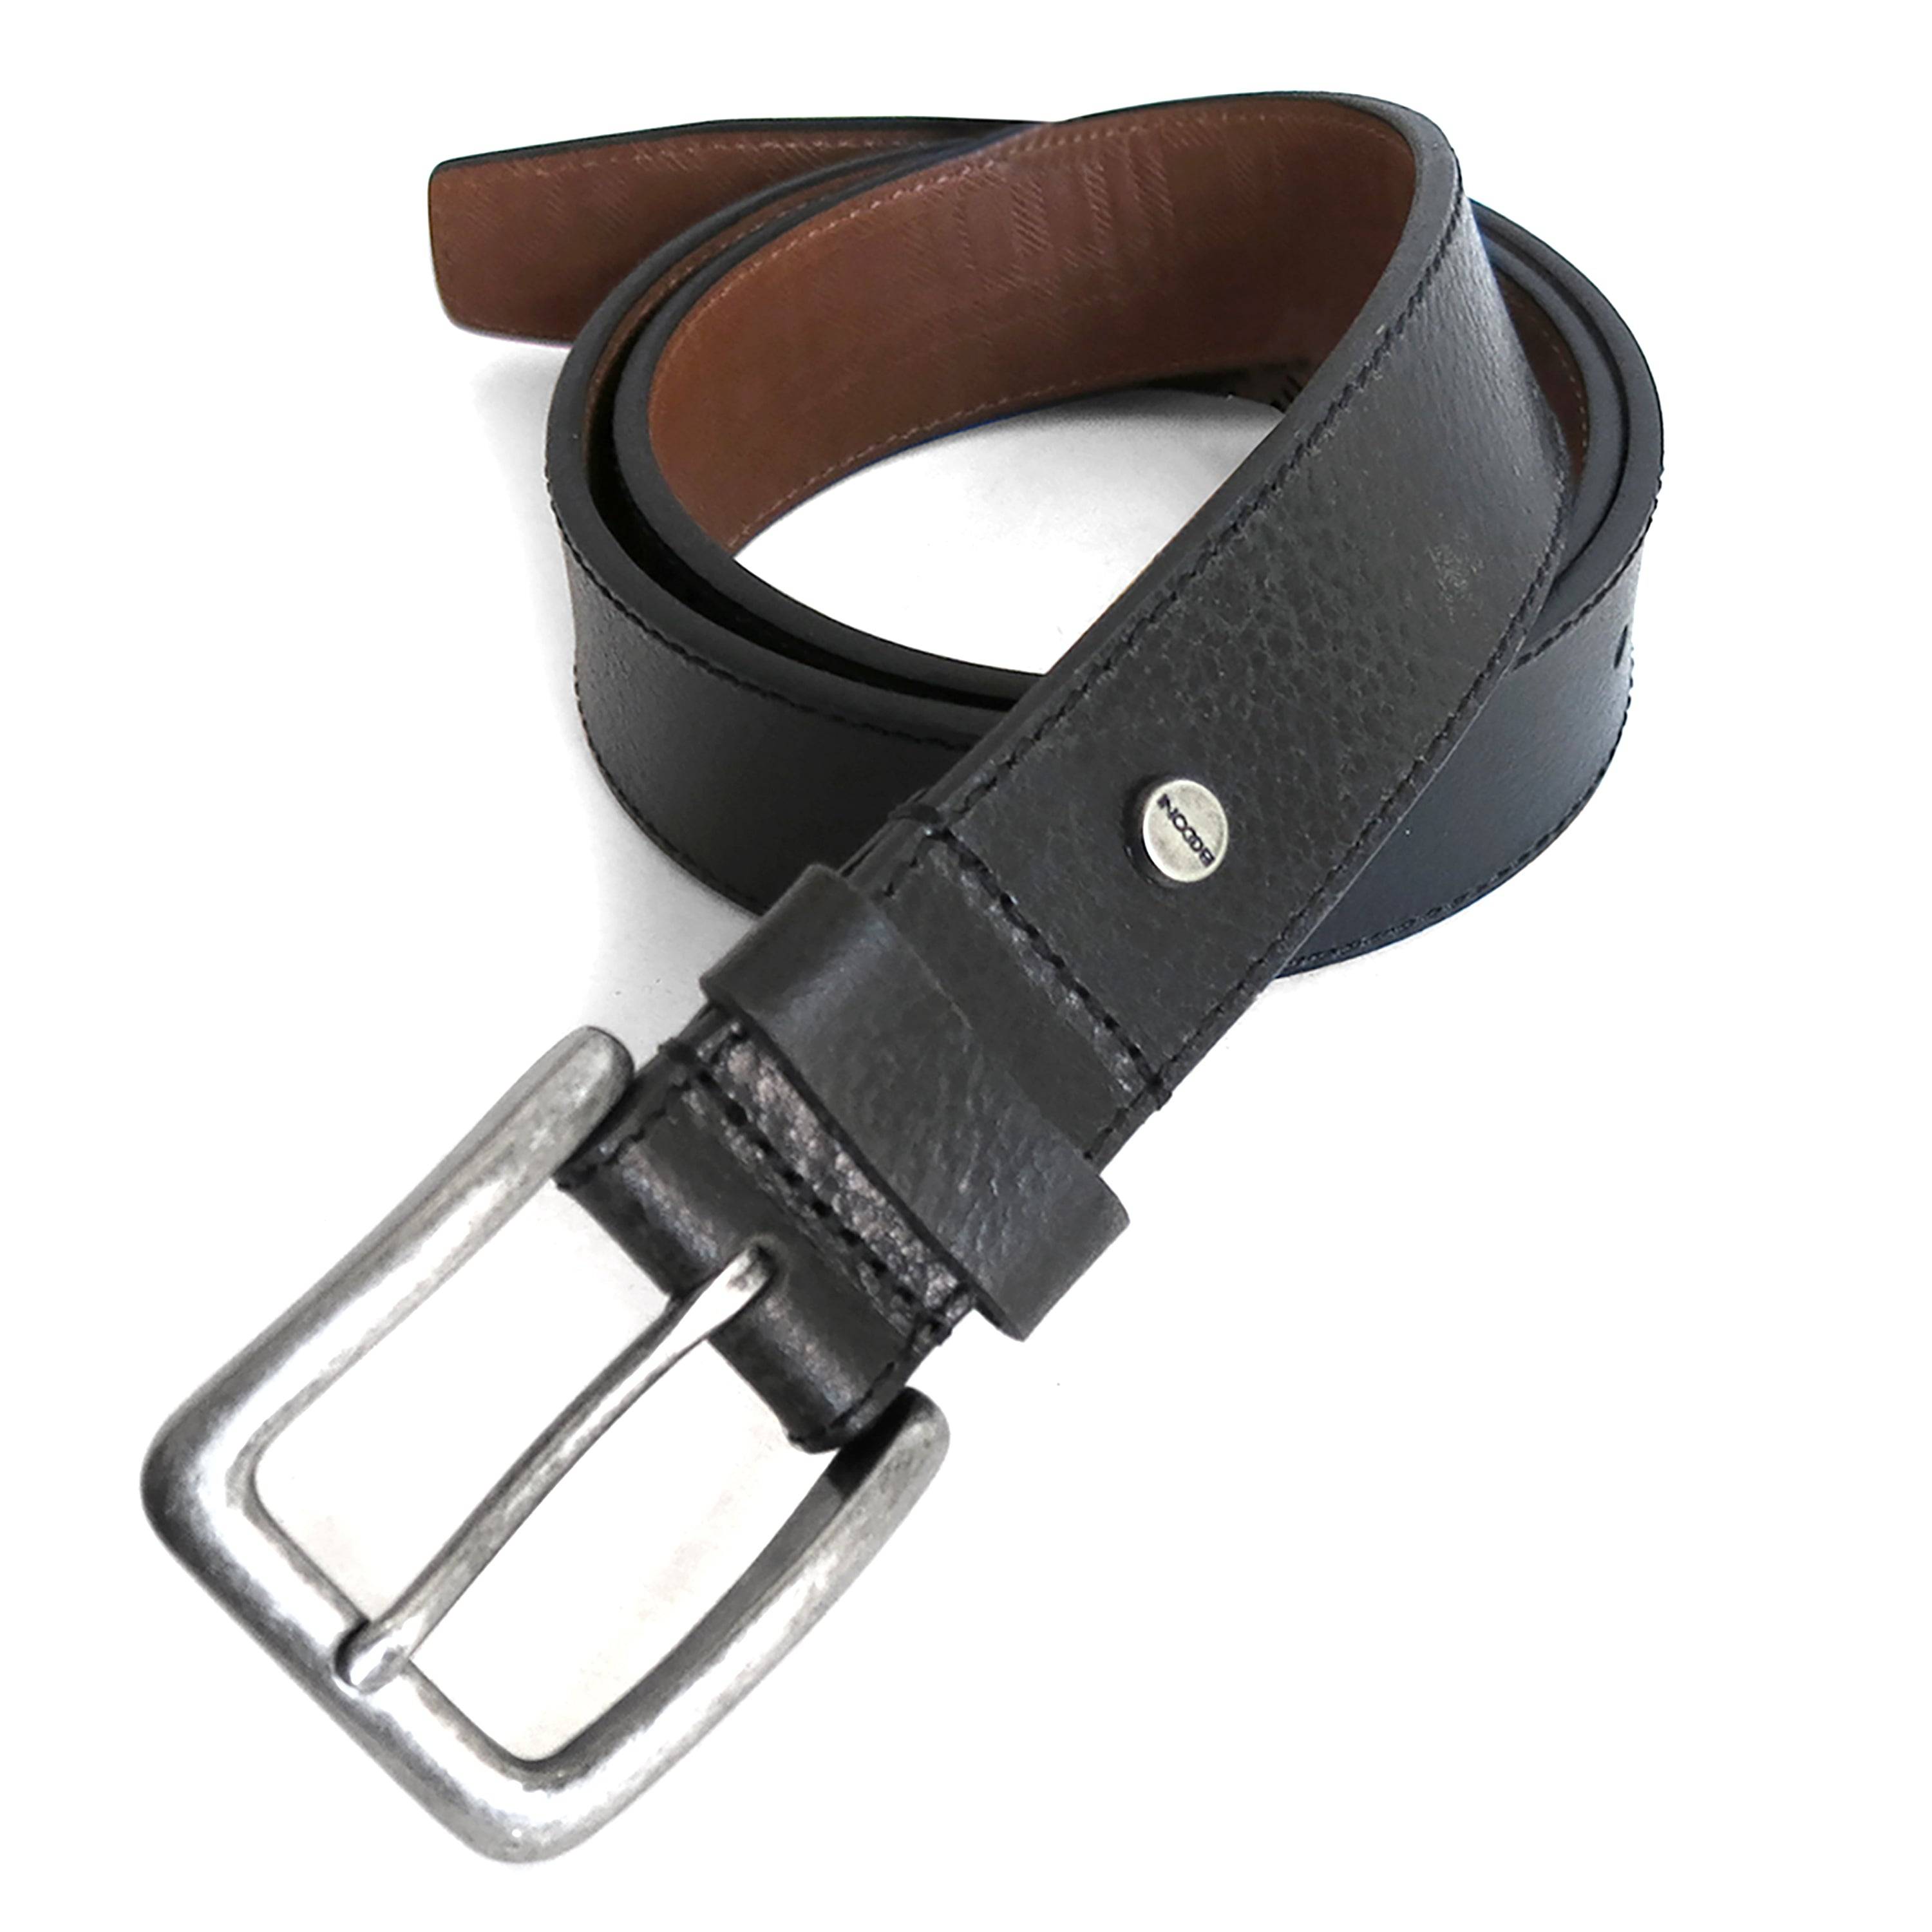 Buy CIMONI Classic Executive Men's Leather Belt